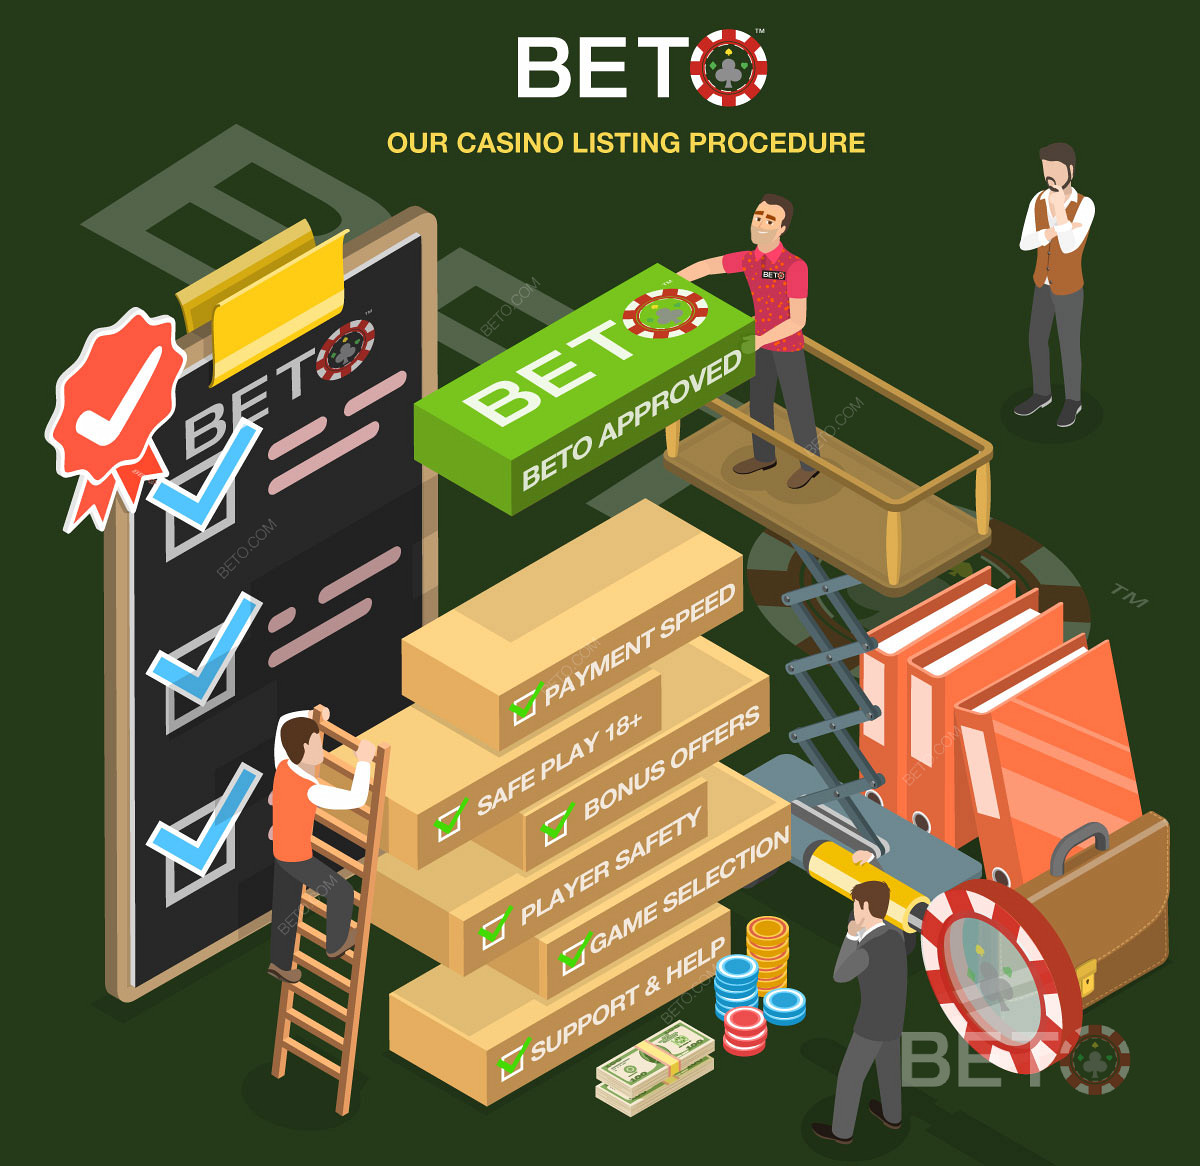 The Detailed Casino Review Process on BETO.com